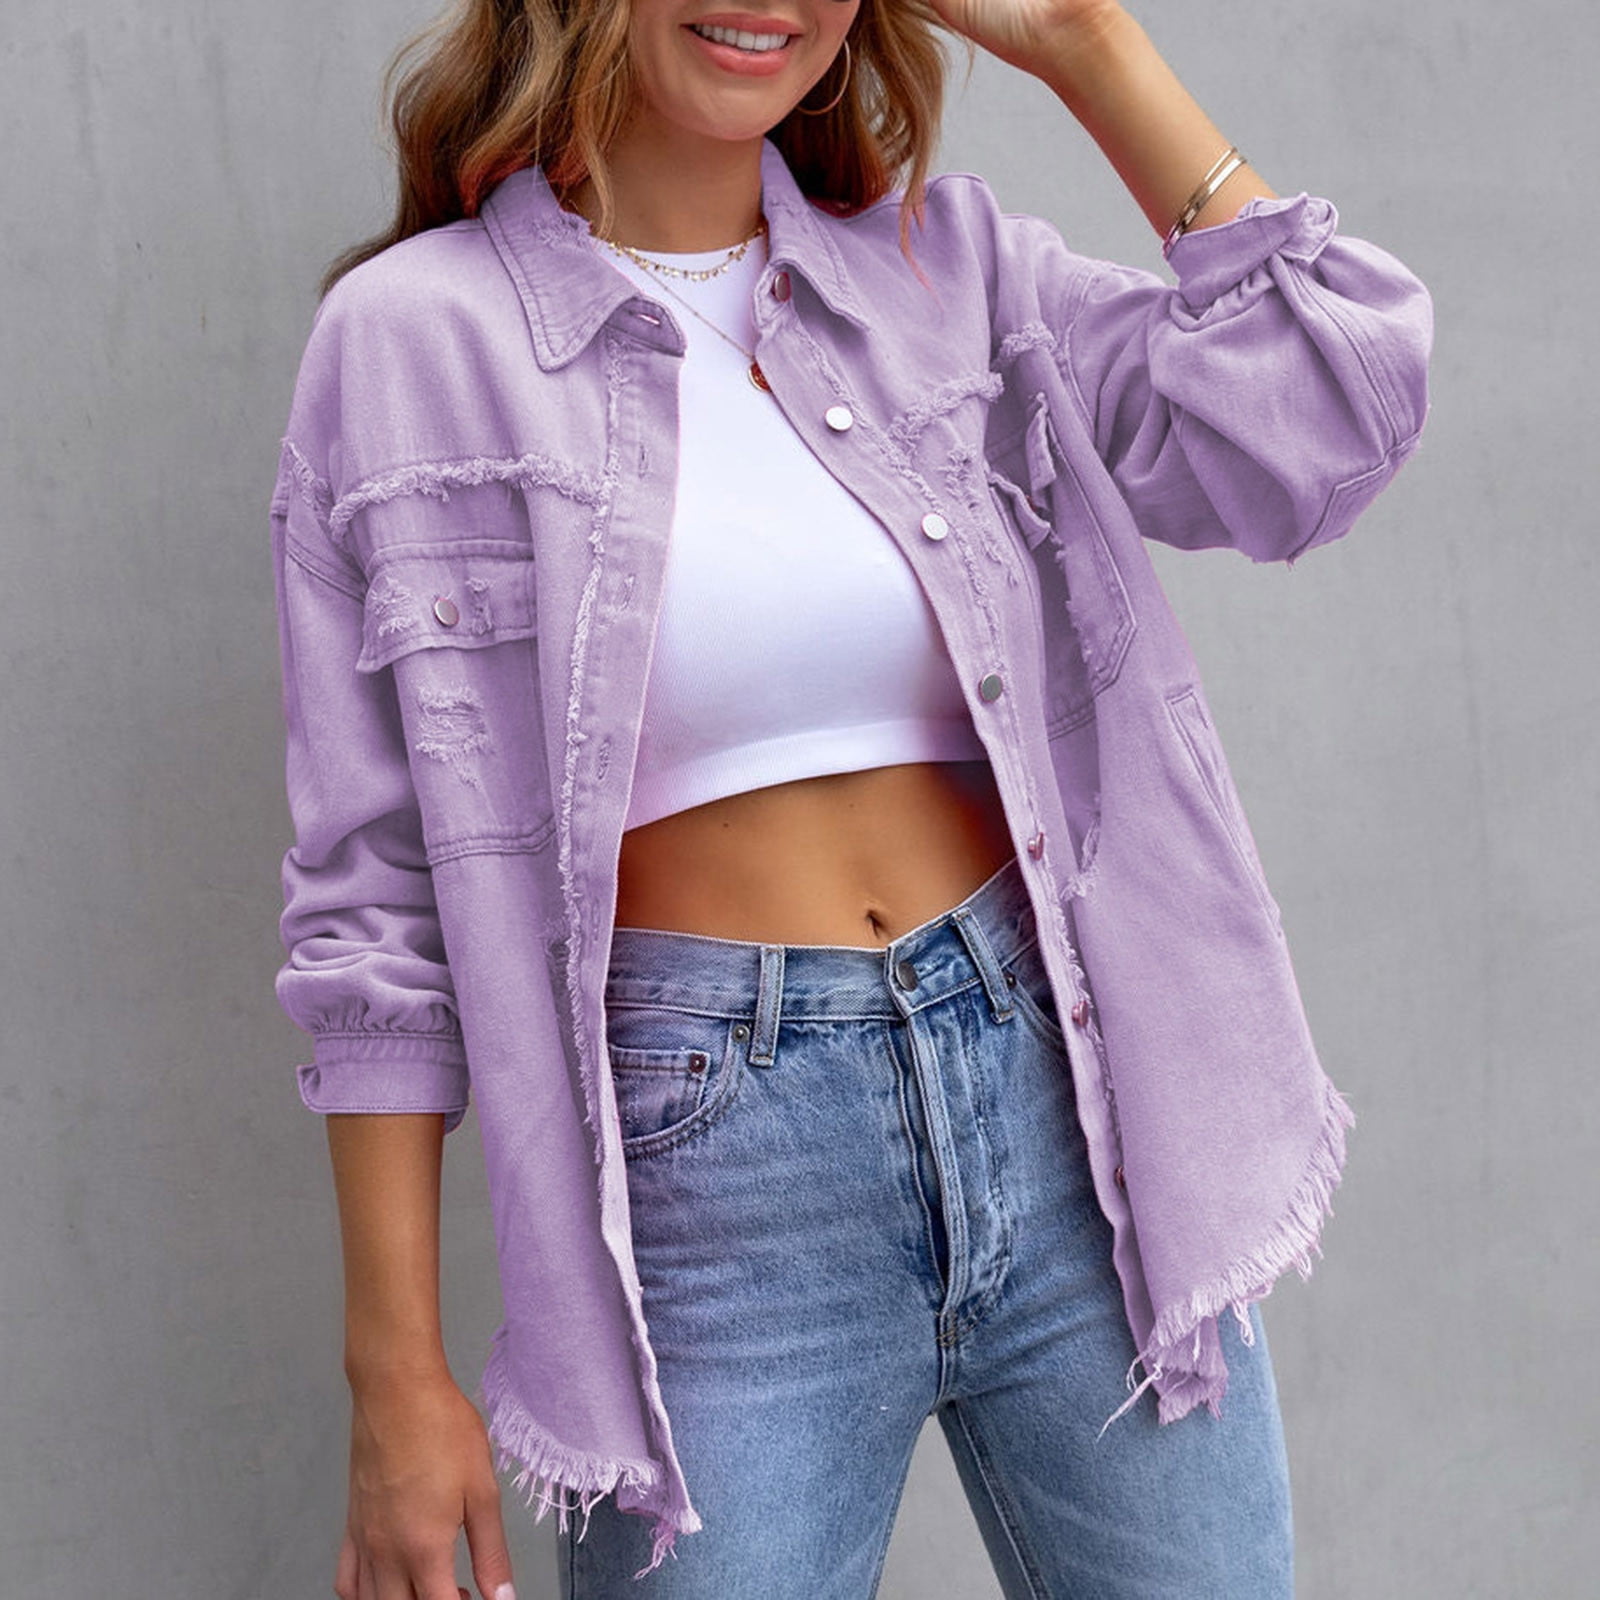 RYRJJ Women's Frayed Denim Jacket Casual Long Sleeve Button Up Boyfriend  Ripped Jean Coat Basic Trucker Jackets with Pockets(Purple,L) 